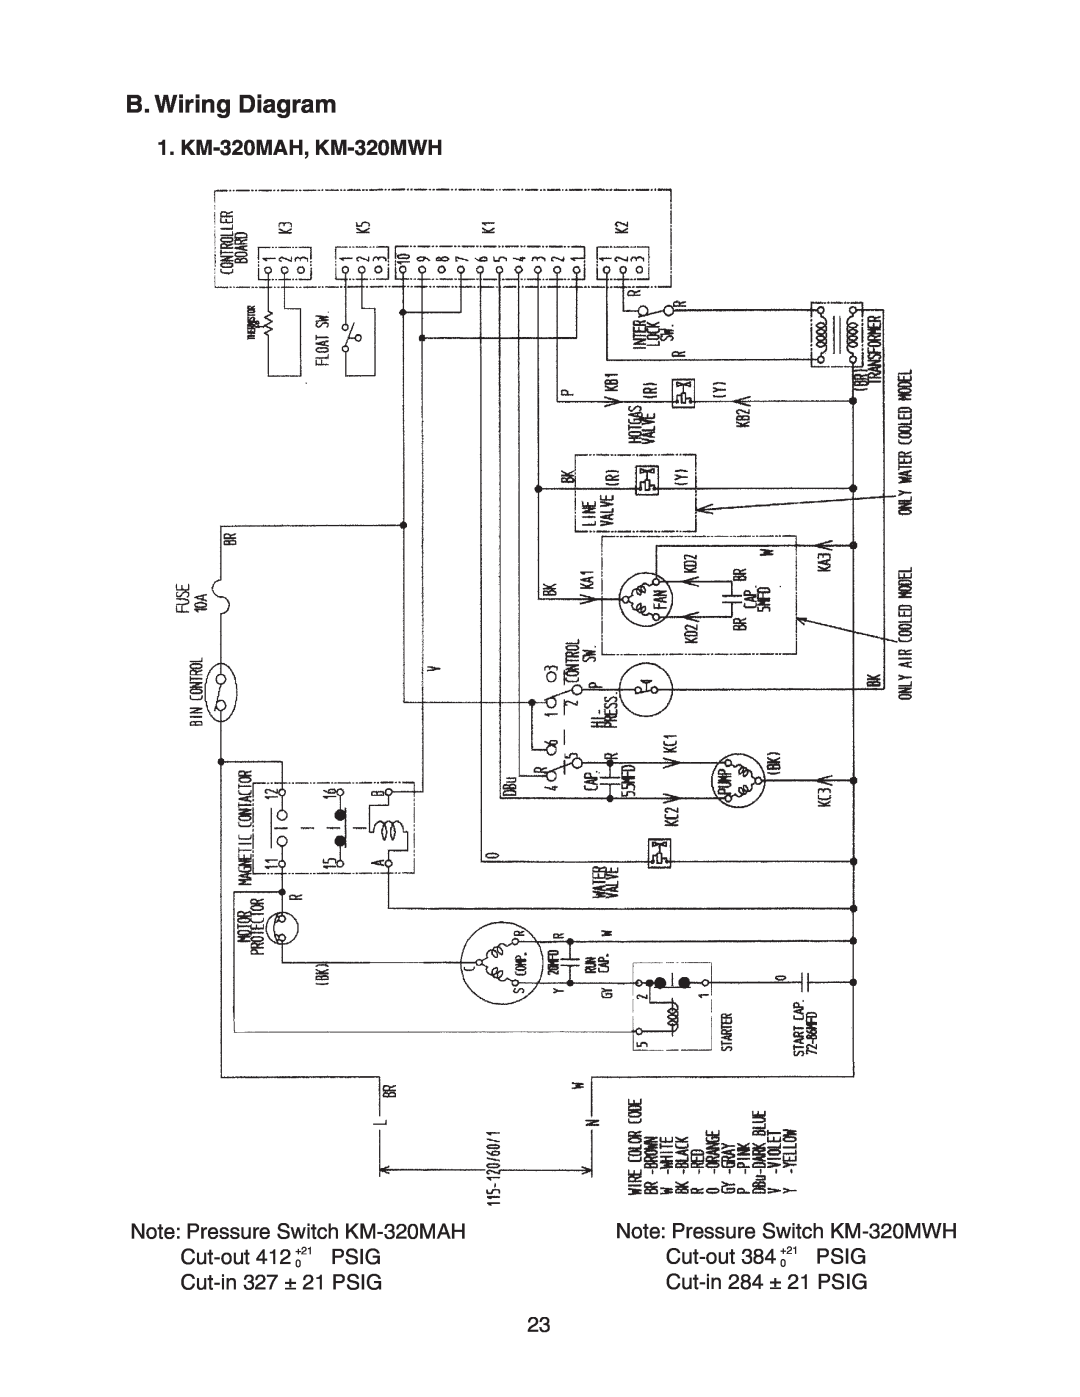 Hoshizaki service manual B. Wiring Diagram, KM-320MAH, KM-320MWH 